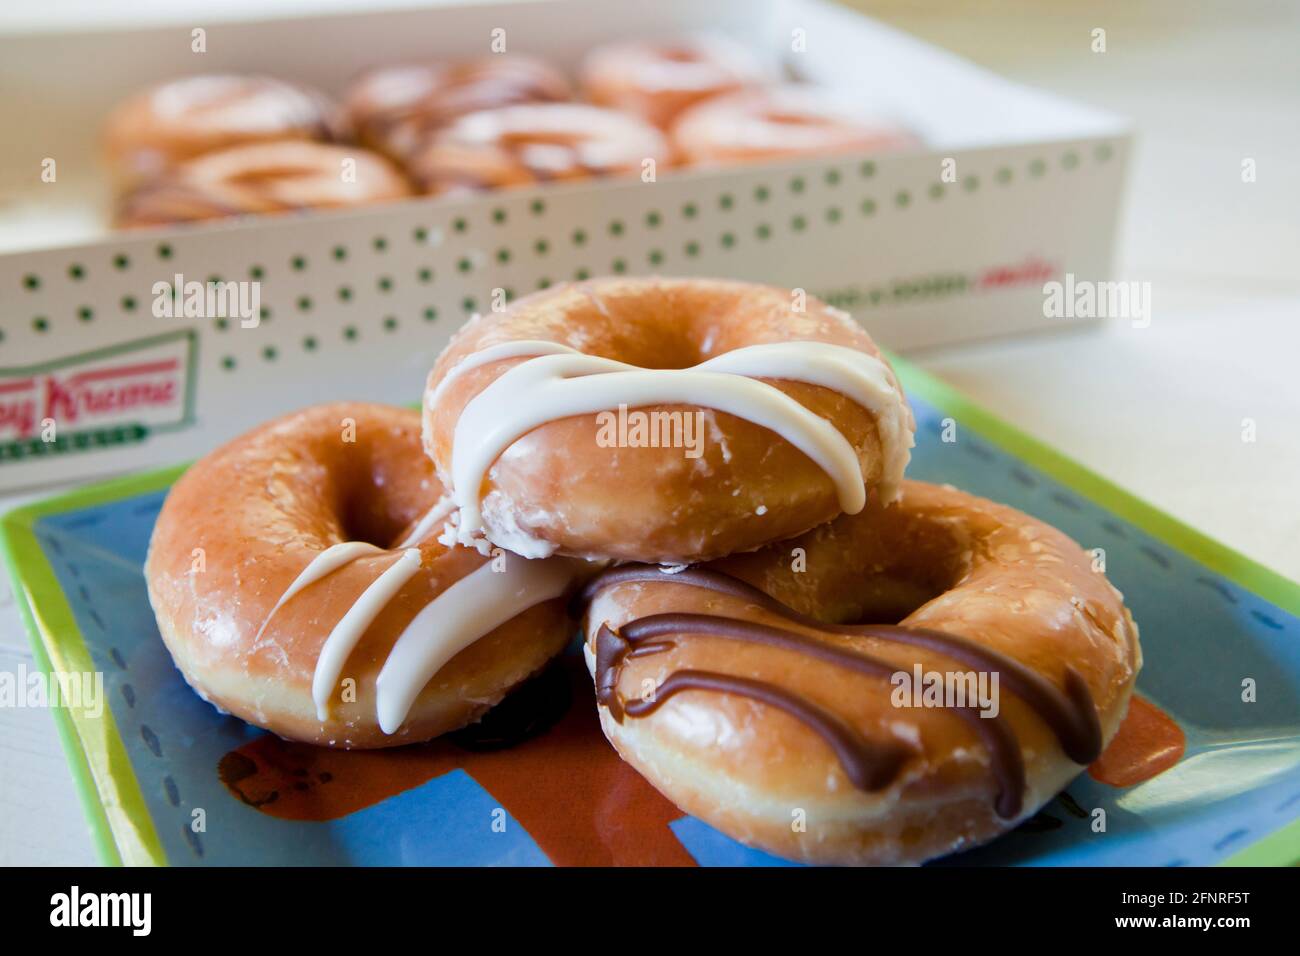 Krispy Kreme donuts on plate - USA Stock Photo